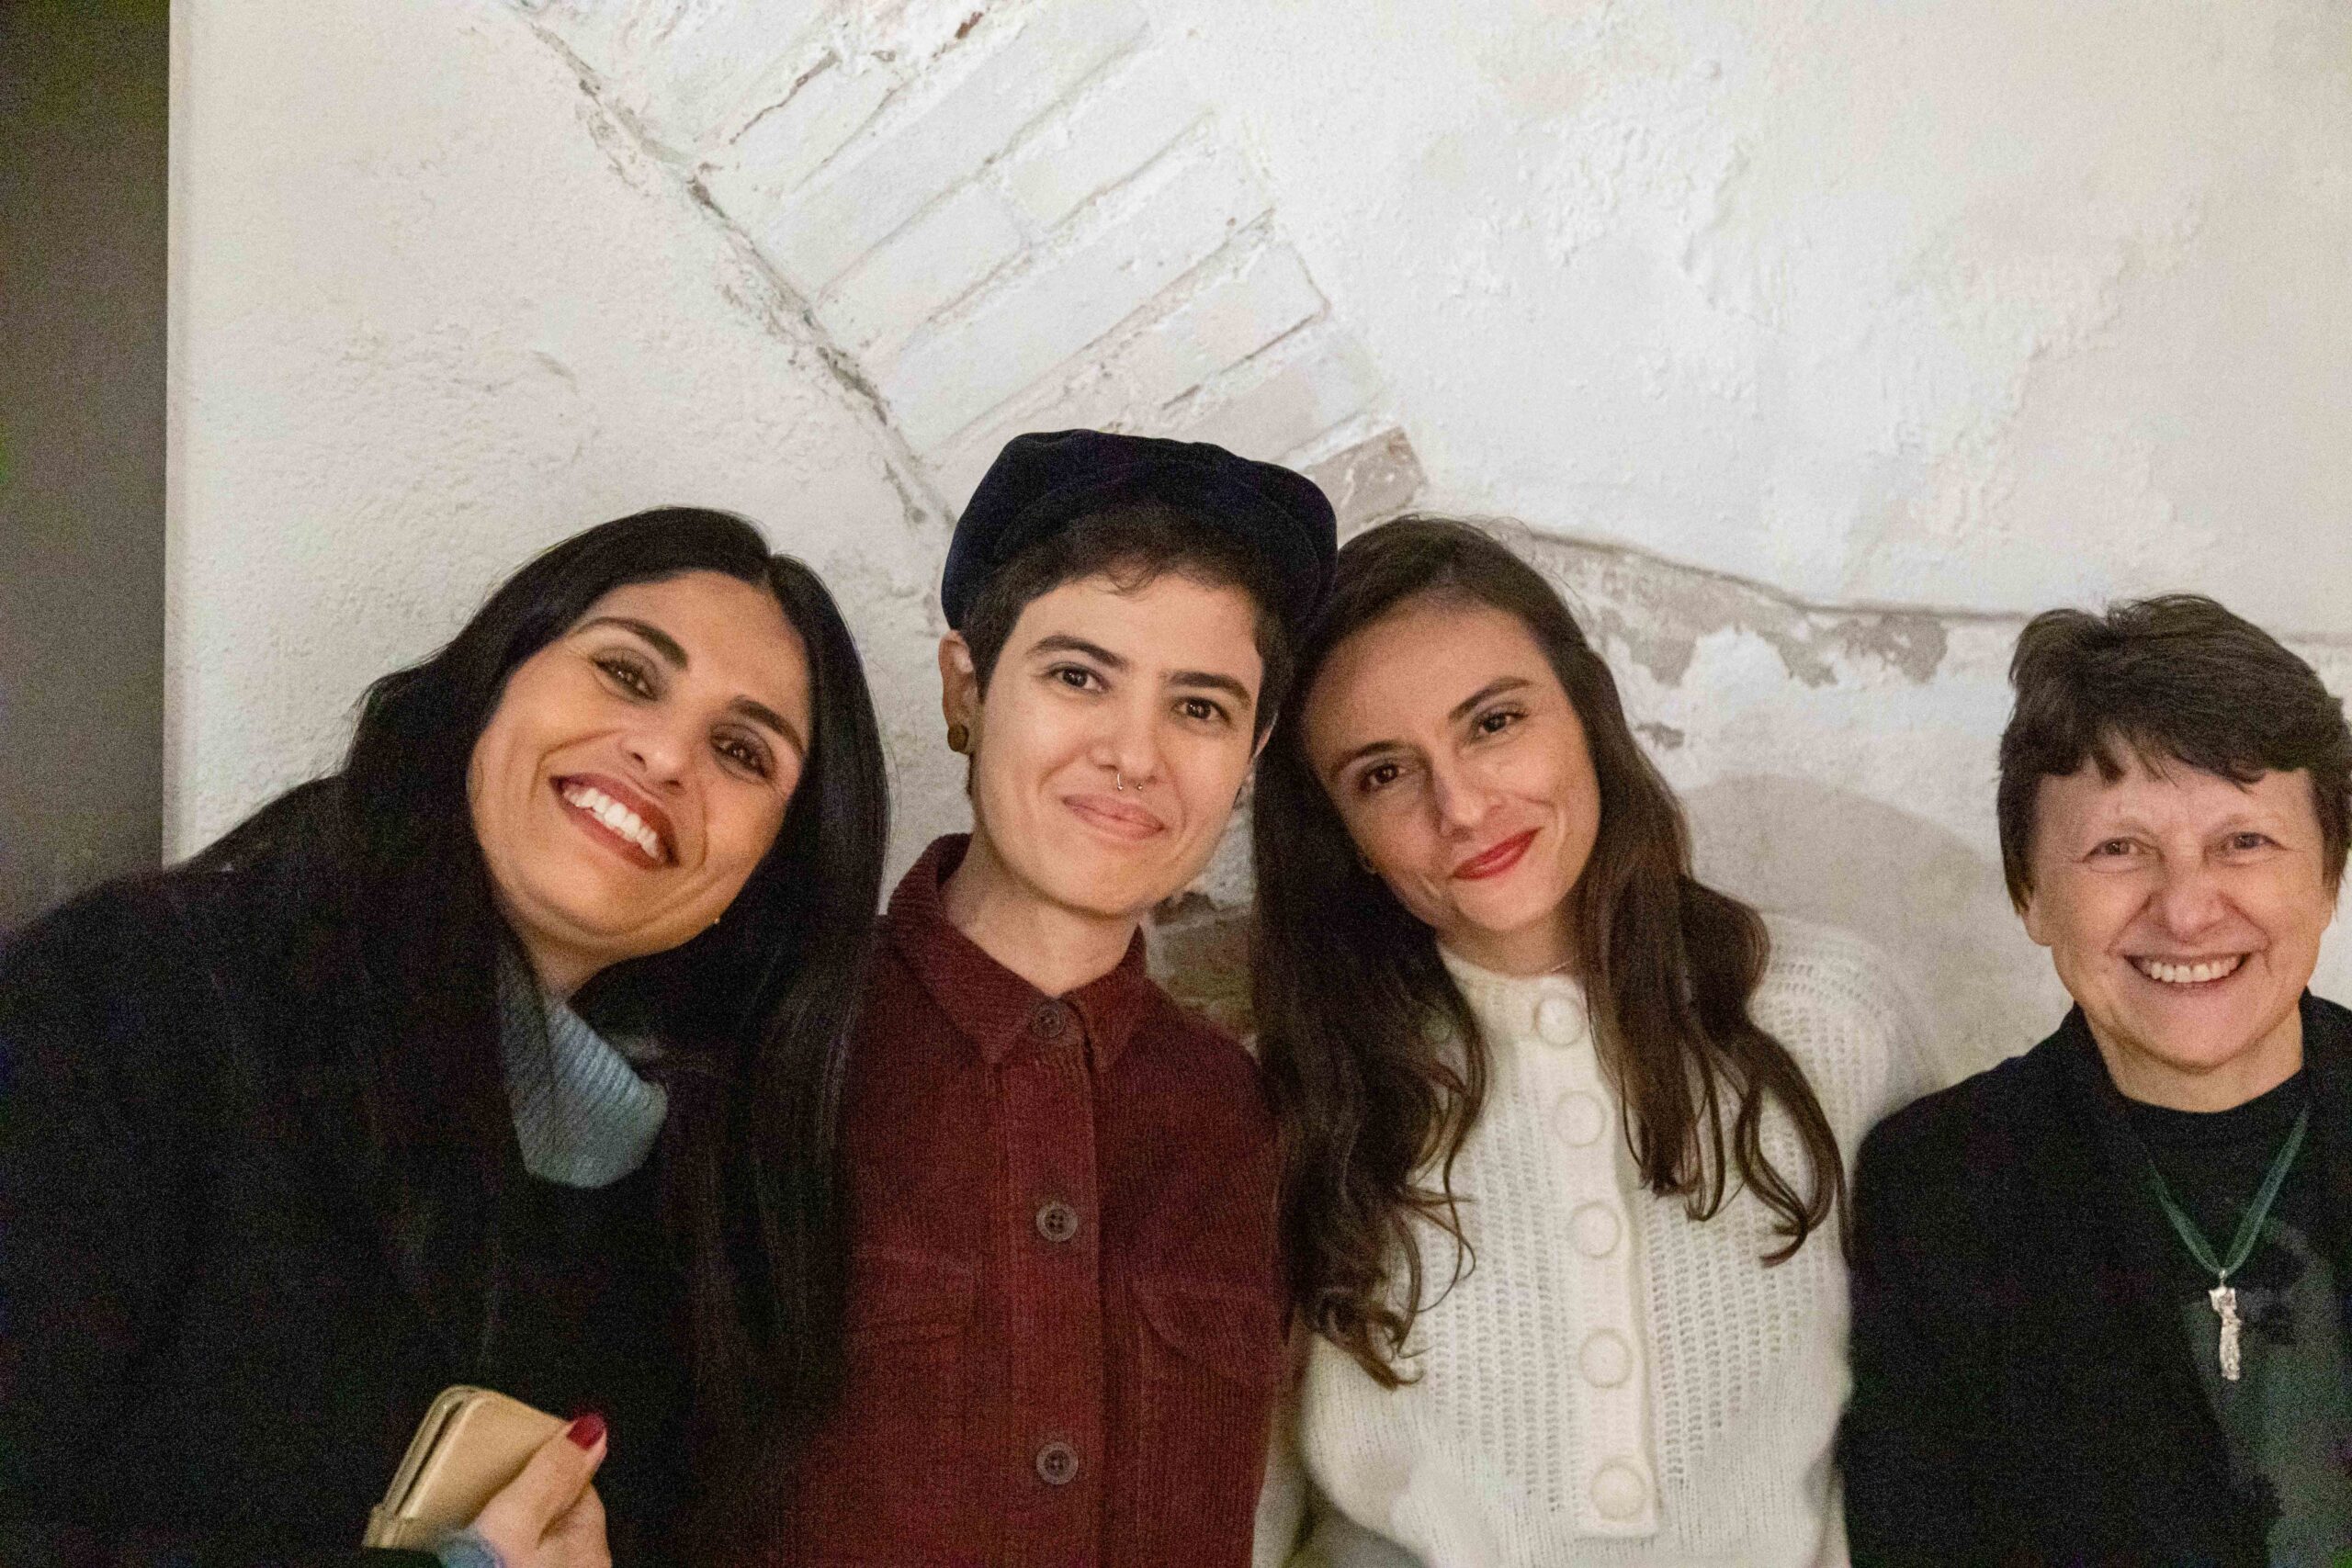 Ivana Salis, Mayara Scduler, Catia Simões and Marilena Pitturru at Entreterras opening - Photo: Massimiliano Frau